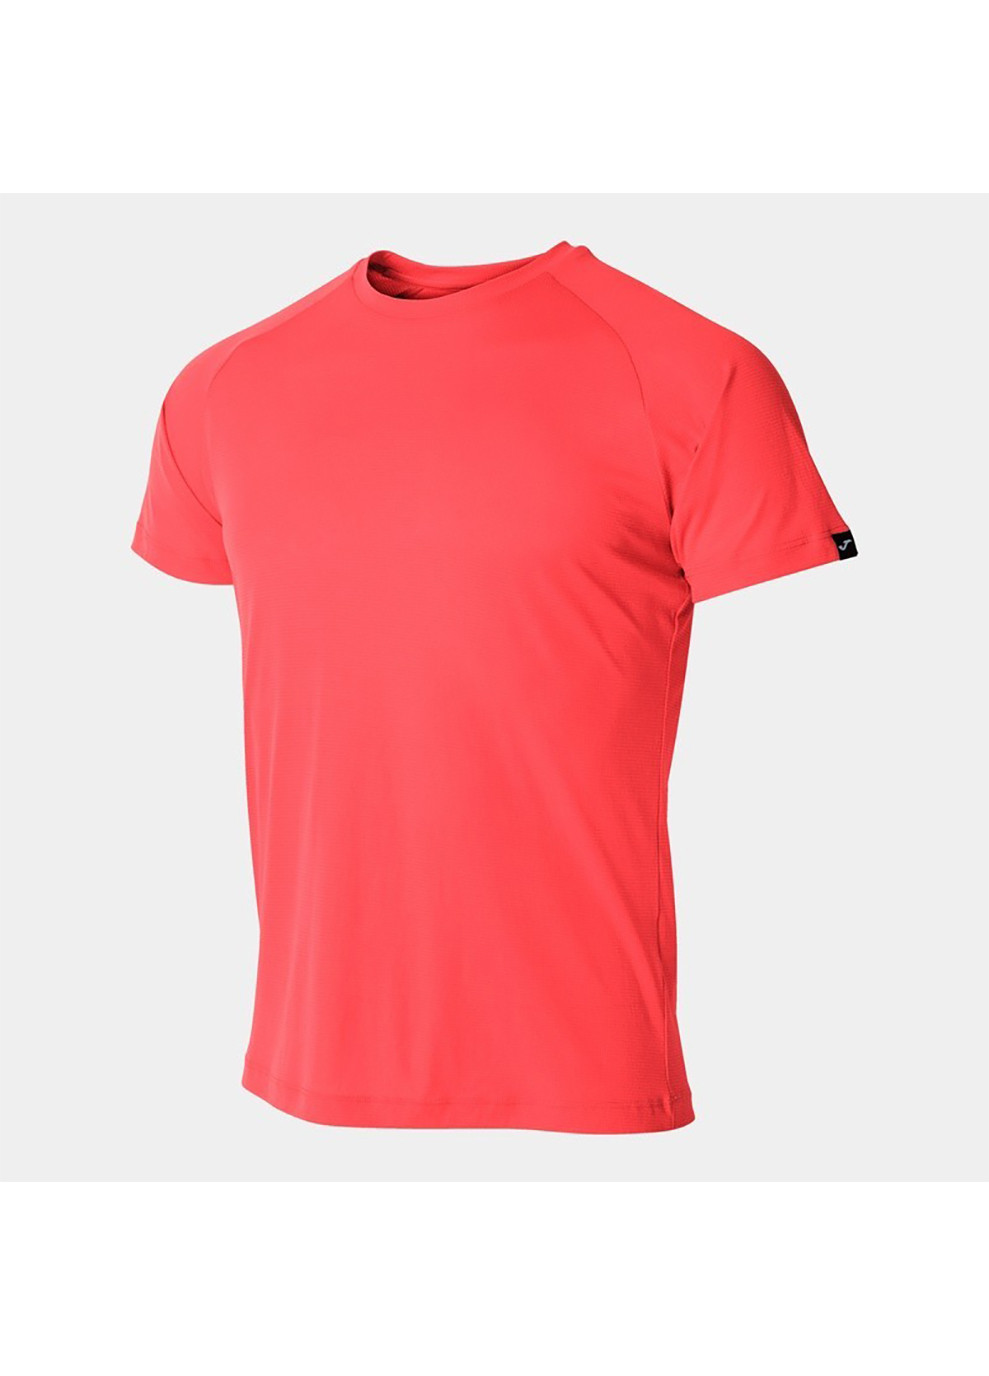 Коралловая футболка r-combi short sleeve t-shirt кораловый Joma